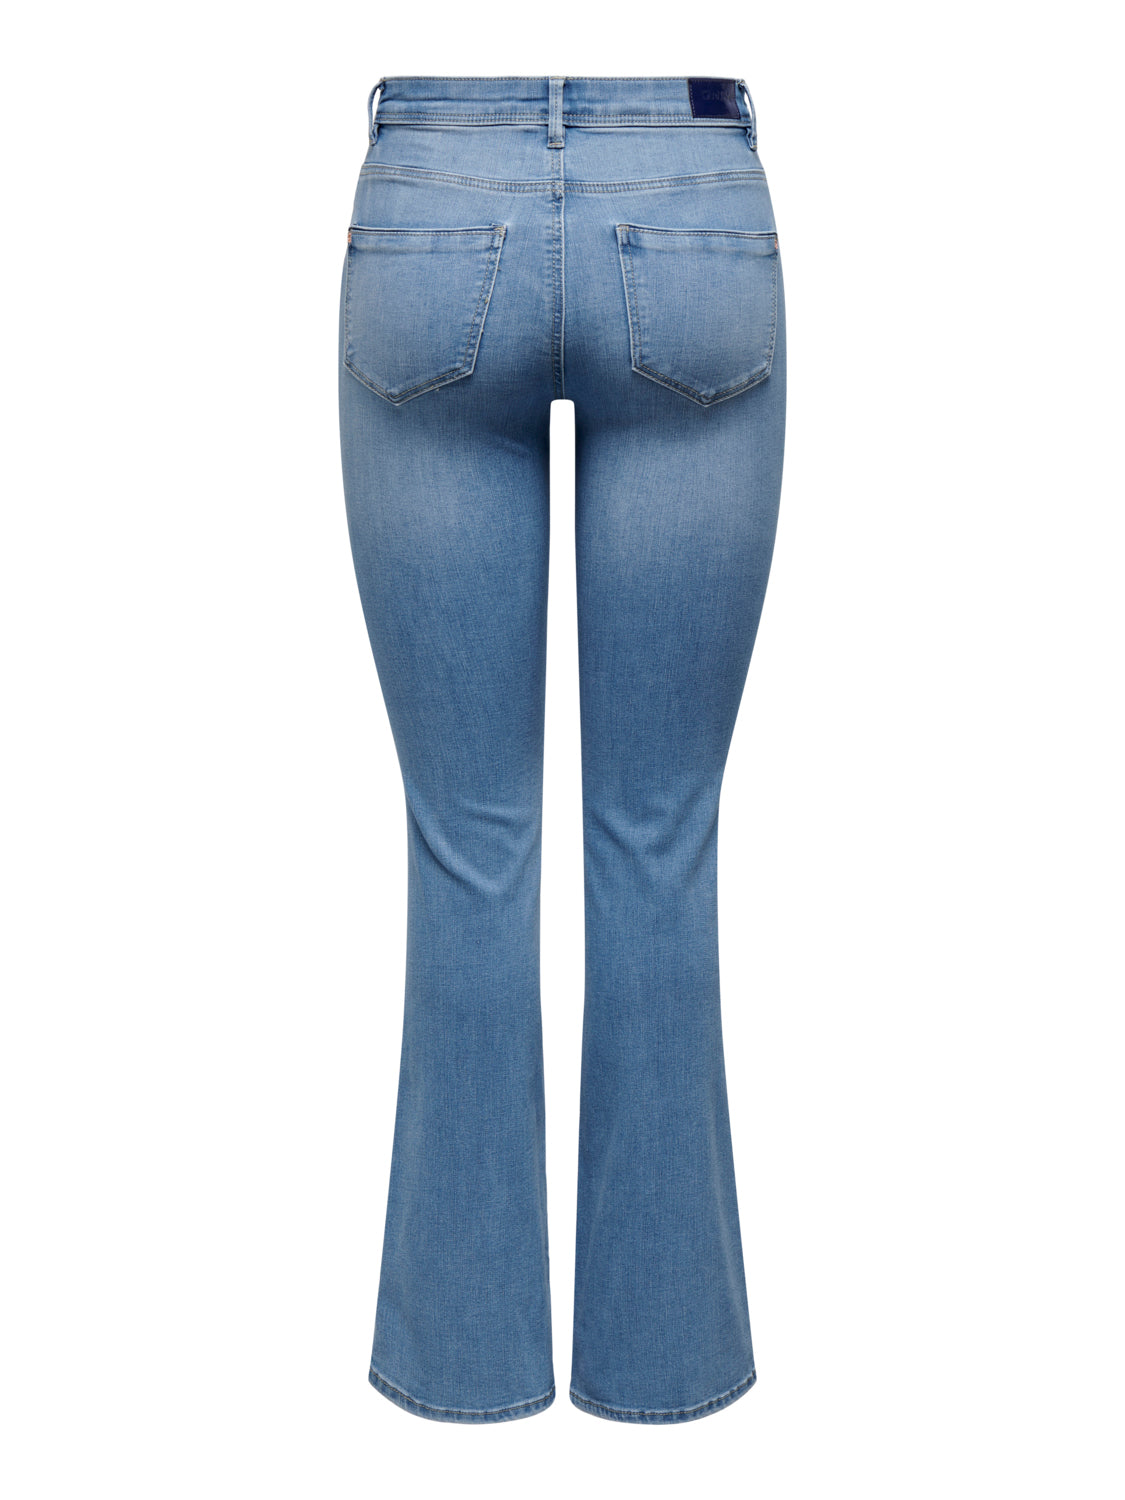 ONLWAUW Jeans - Light Medium Blue Denim